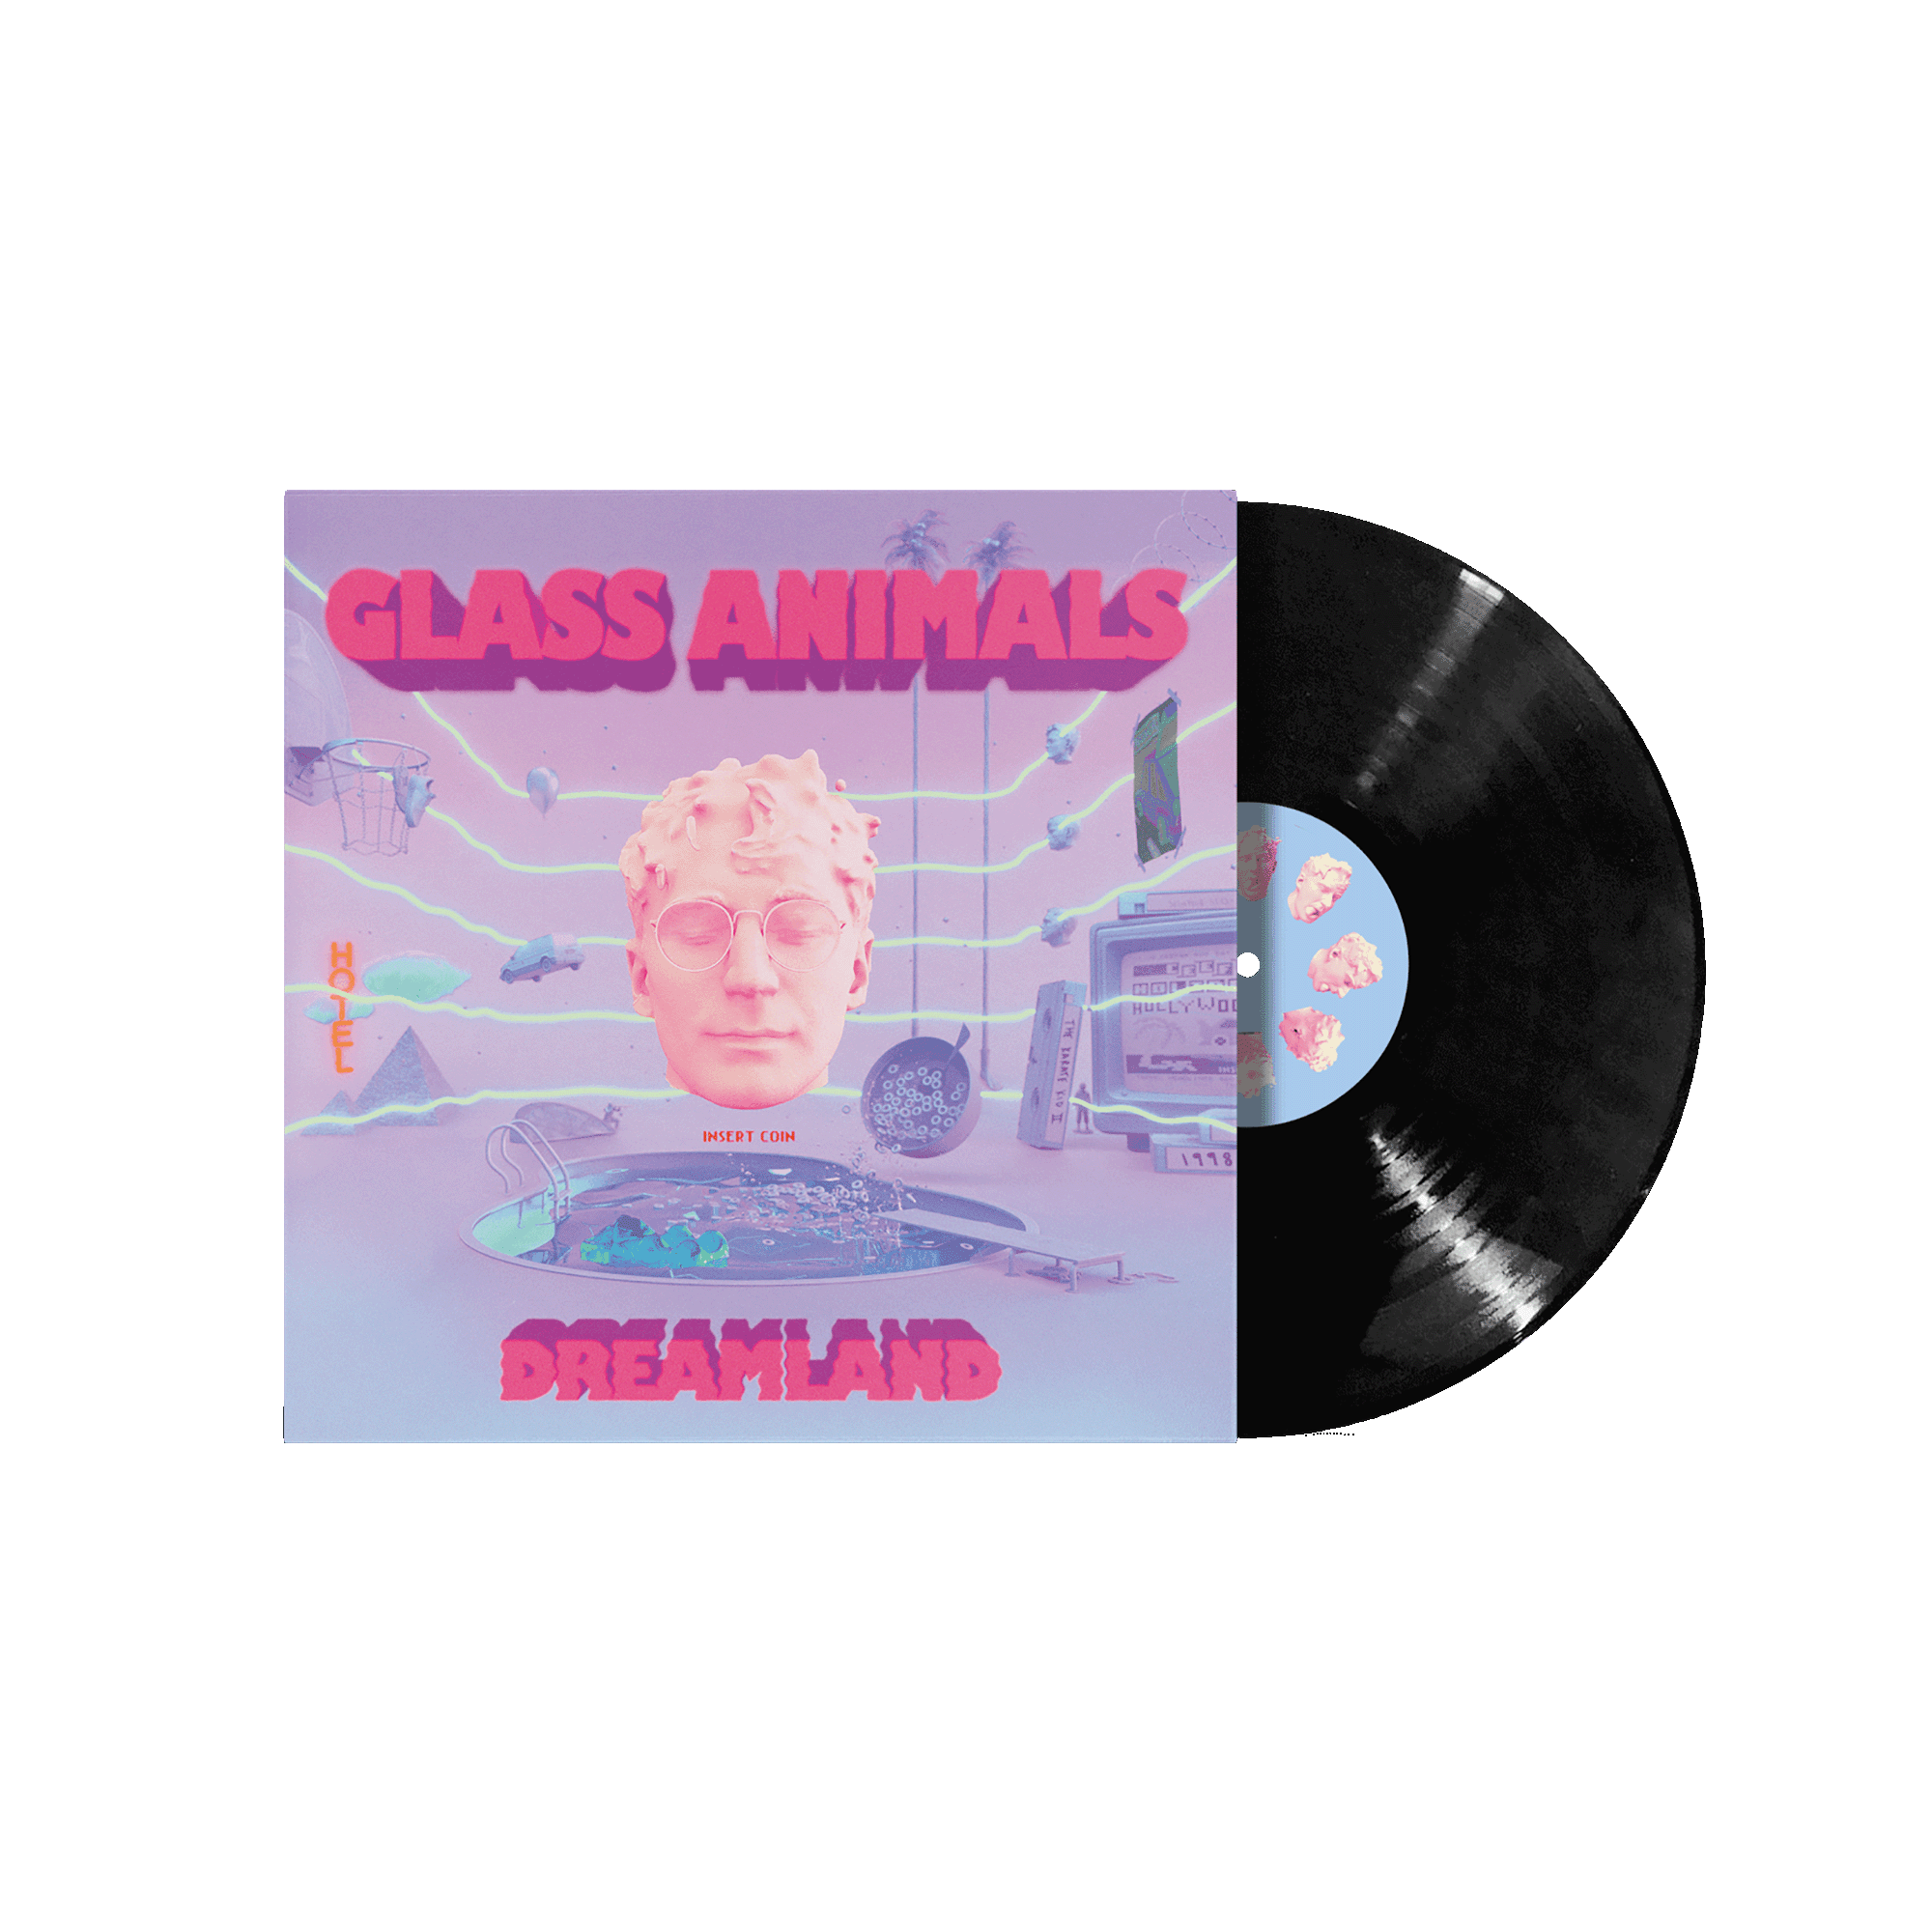 https://images.bravado.de/prod/product-assets/glass-animals/glass-animals/products/132878/web/389575/image-thumb__389575__3000x3000_original/Glass-Animals-Dreamland-Black-Vinyl-Vinyl-132878-389575.4e5e7ffa.png